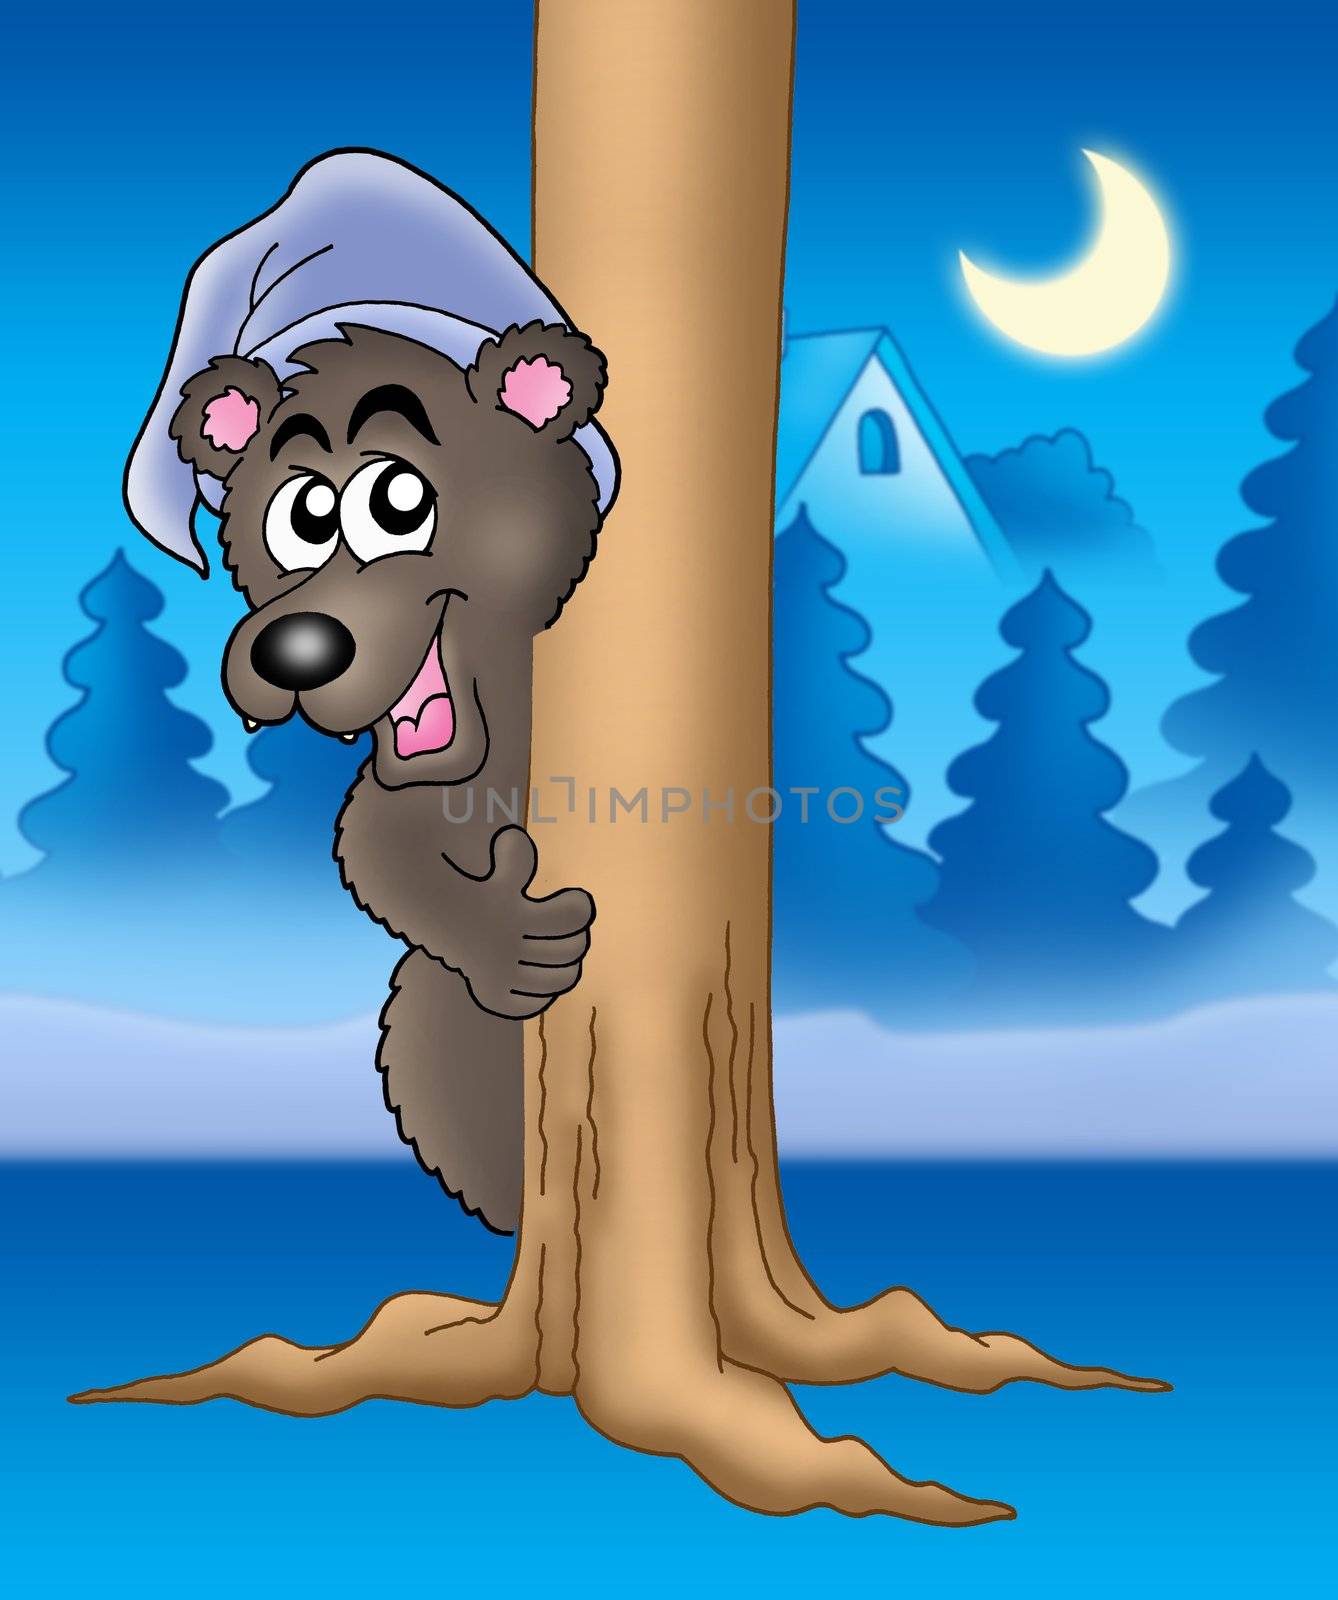 Color illustration of bear in night cap.